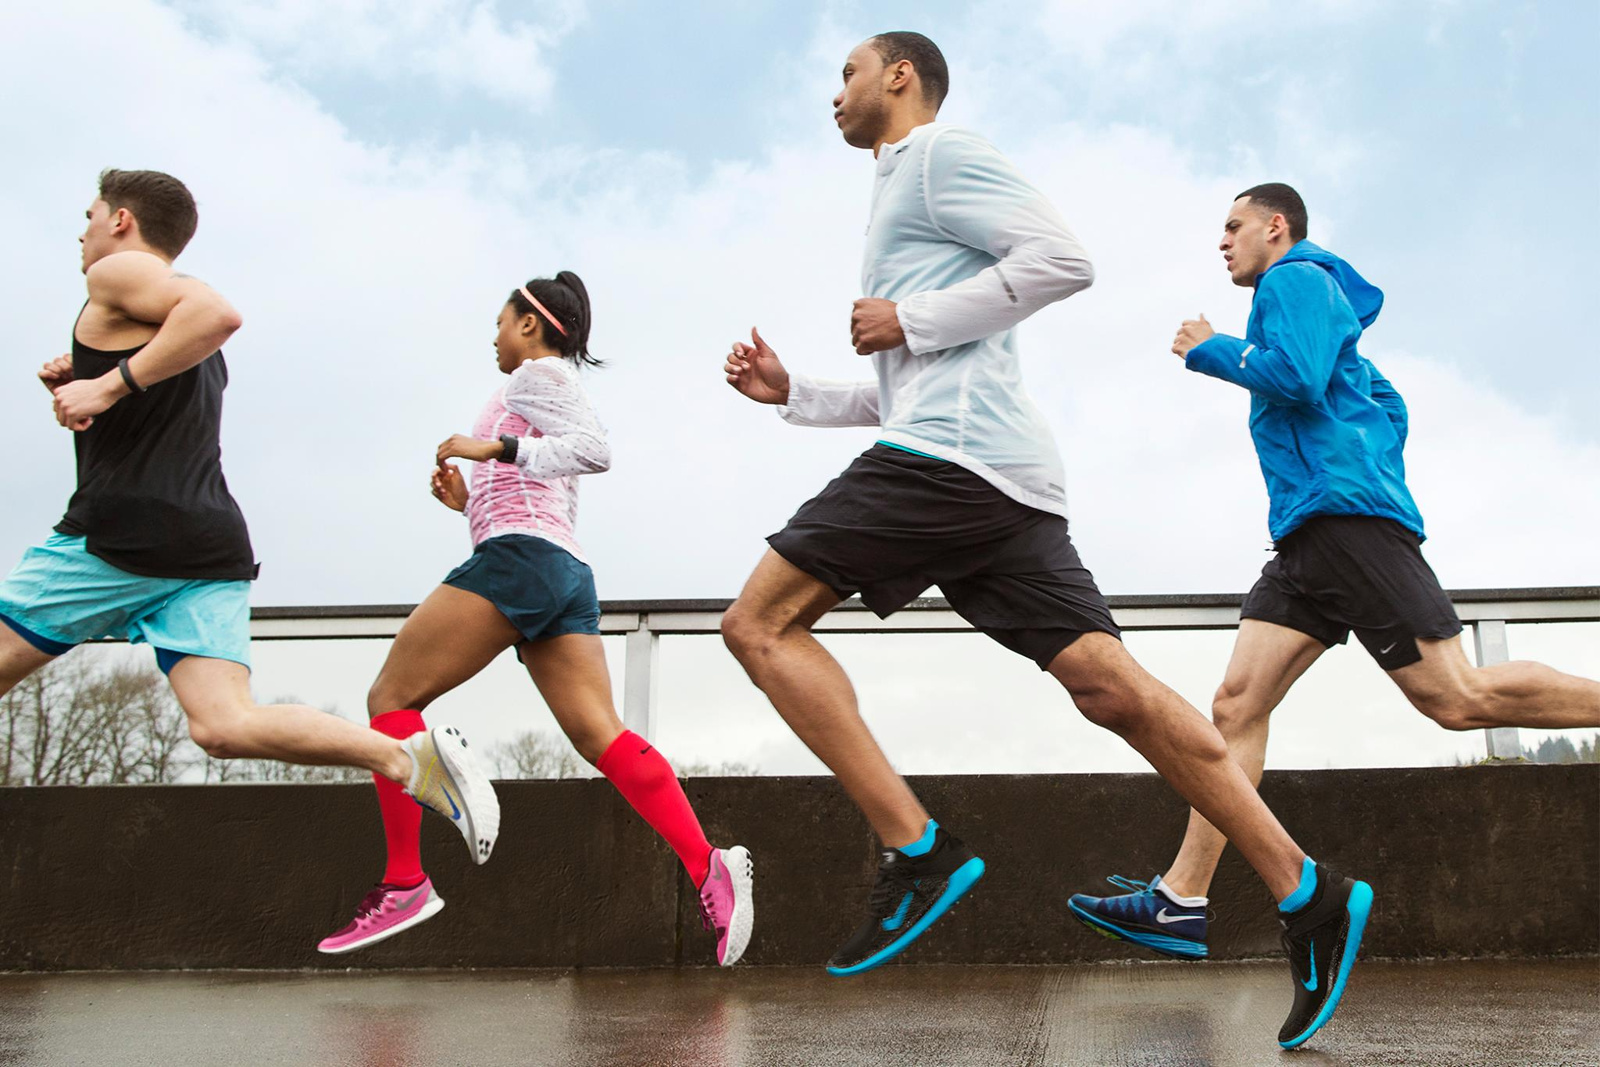 Играют найка. Nike Running. Nike Running бег. Nike Run пробежка. Бегущий человек.